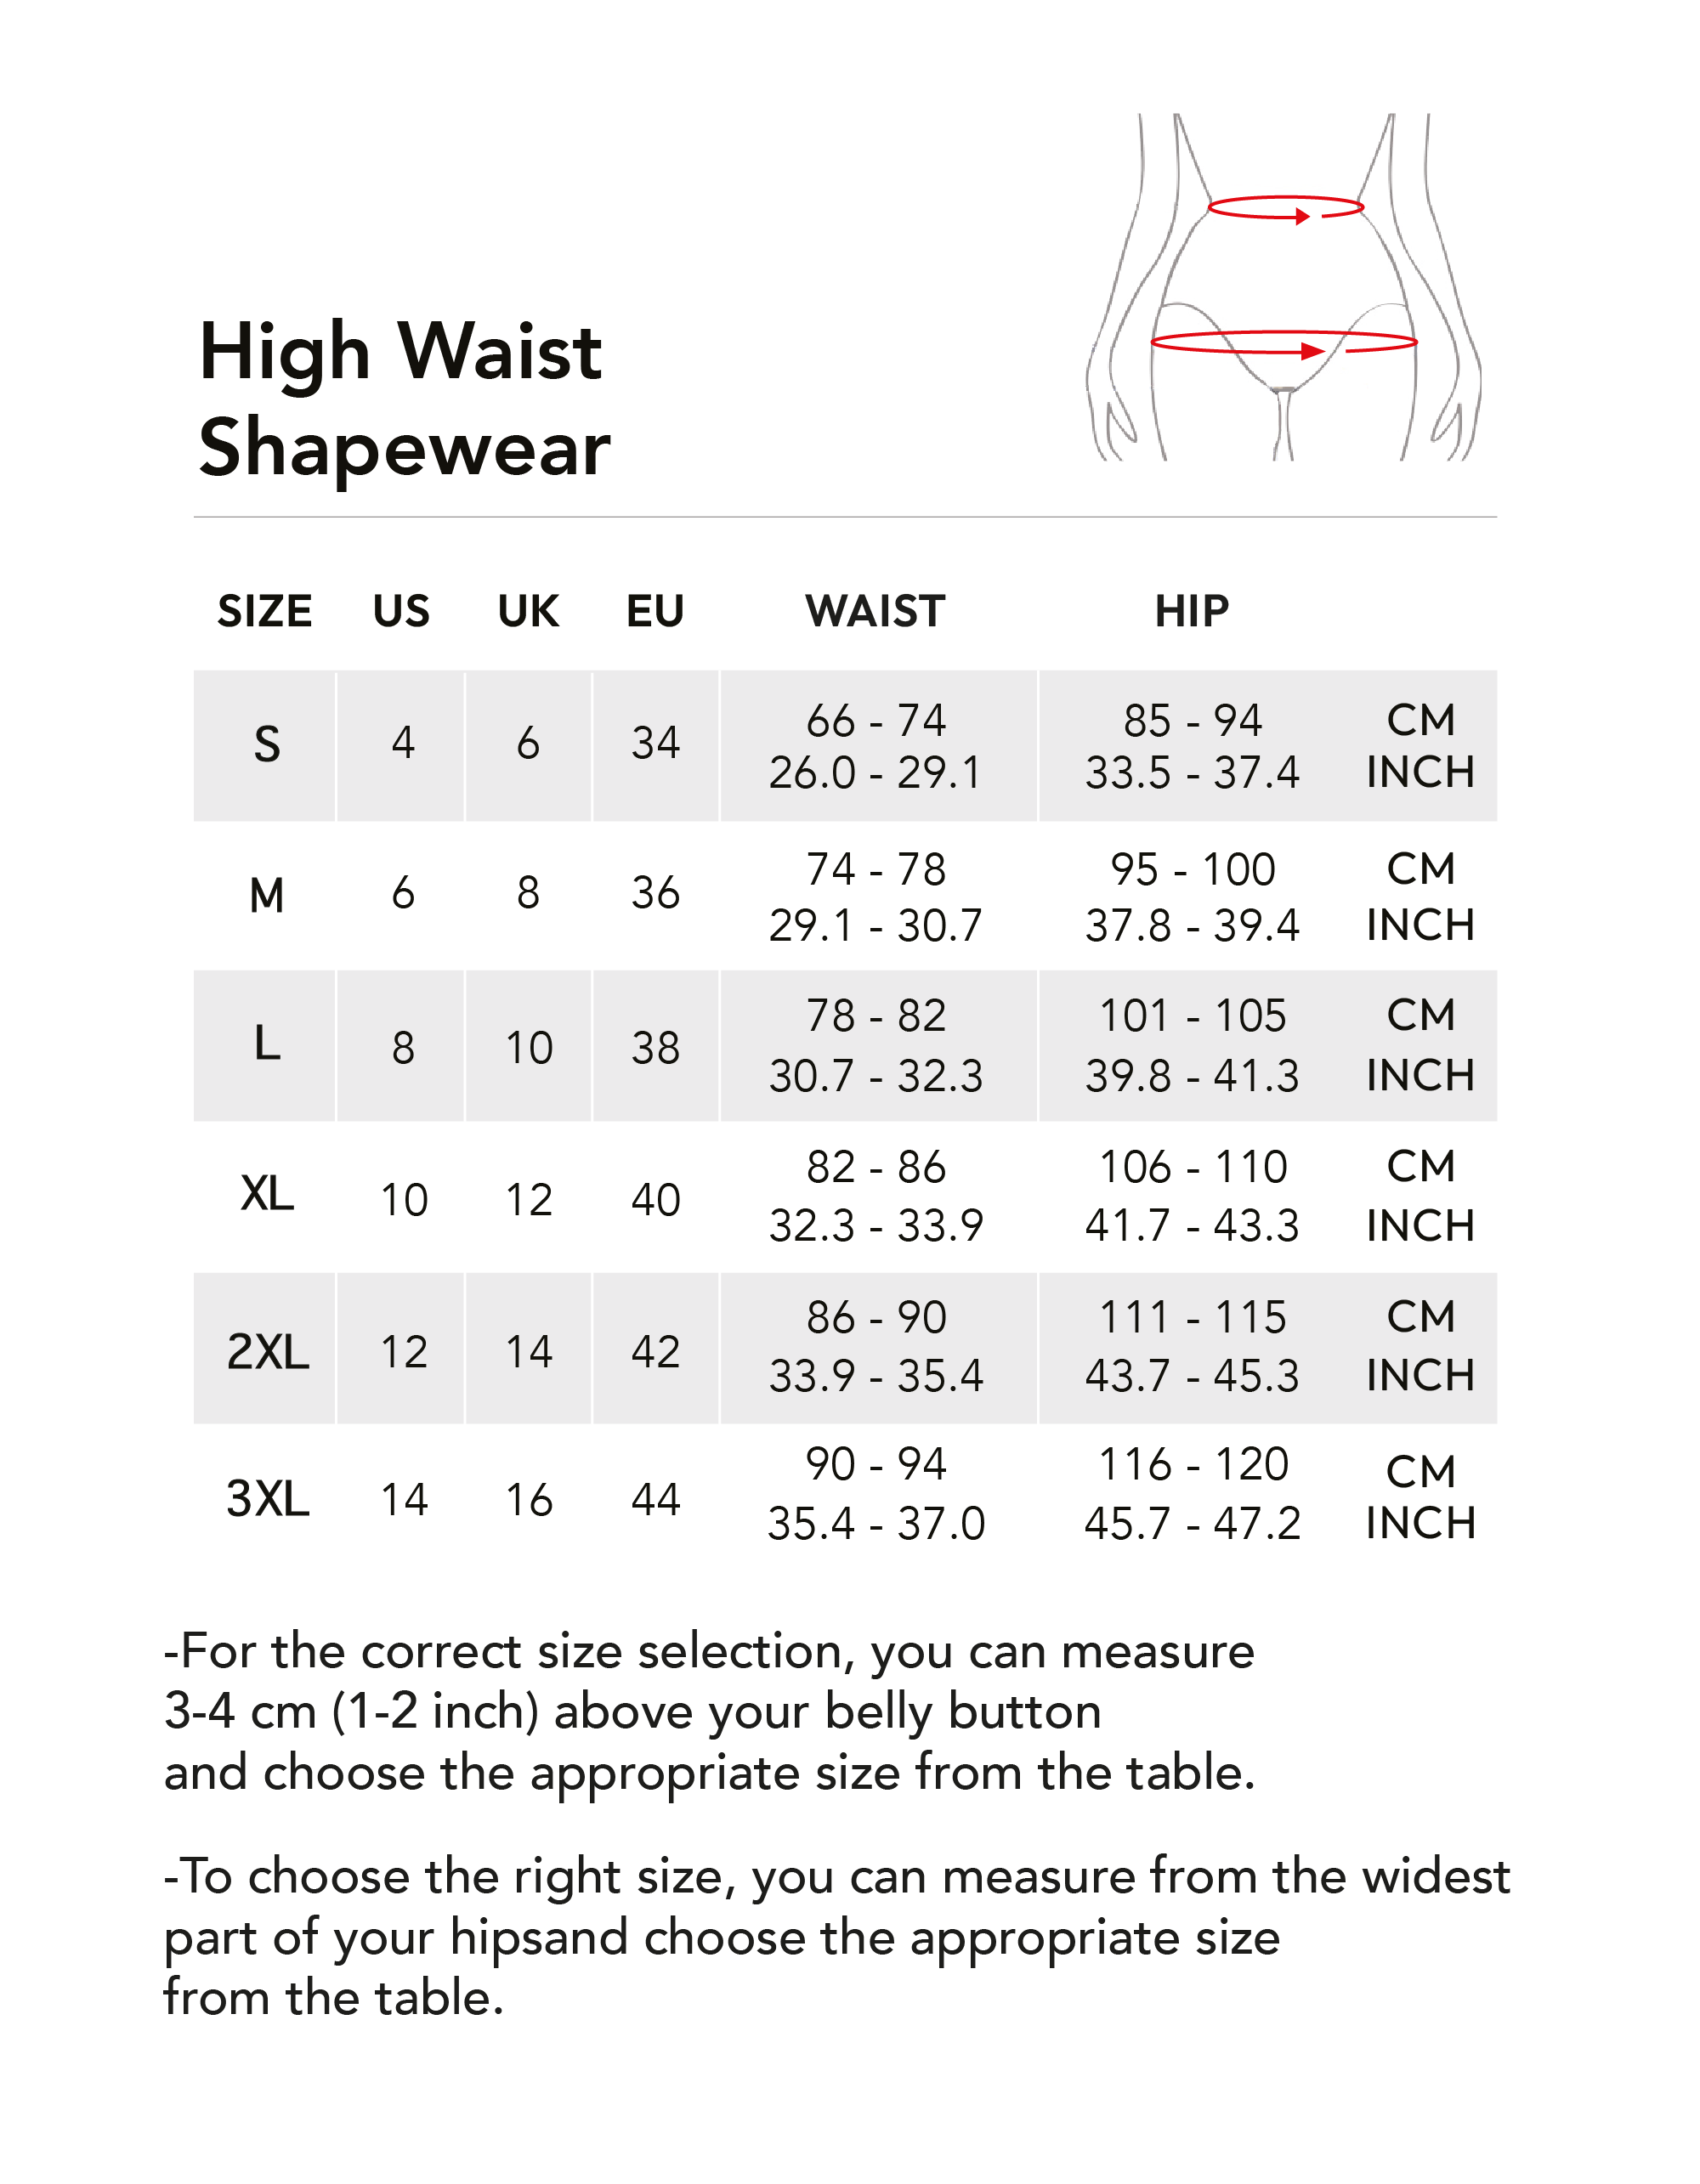 high-waist-shapewear.png (206 KB)